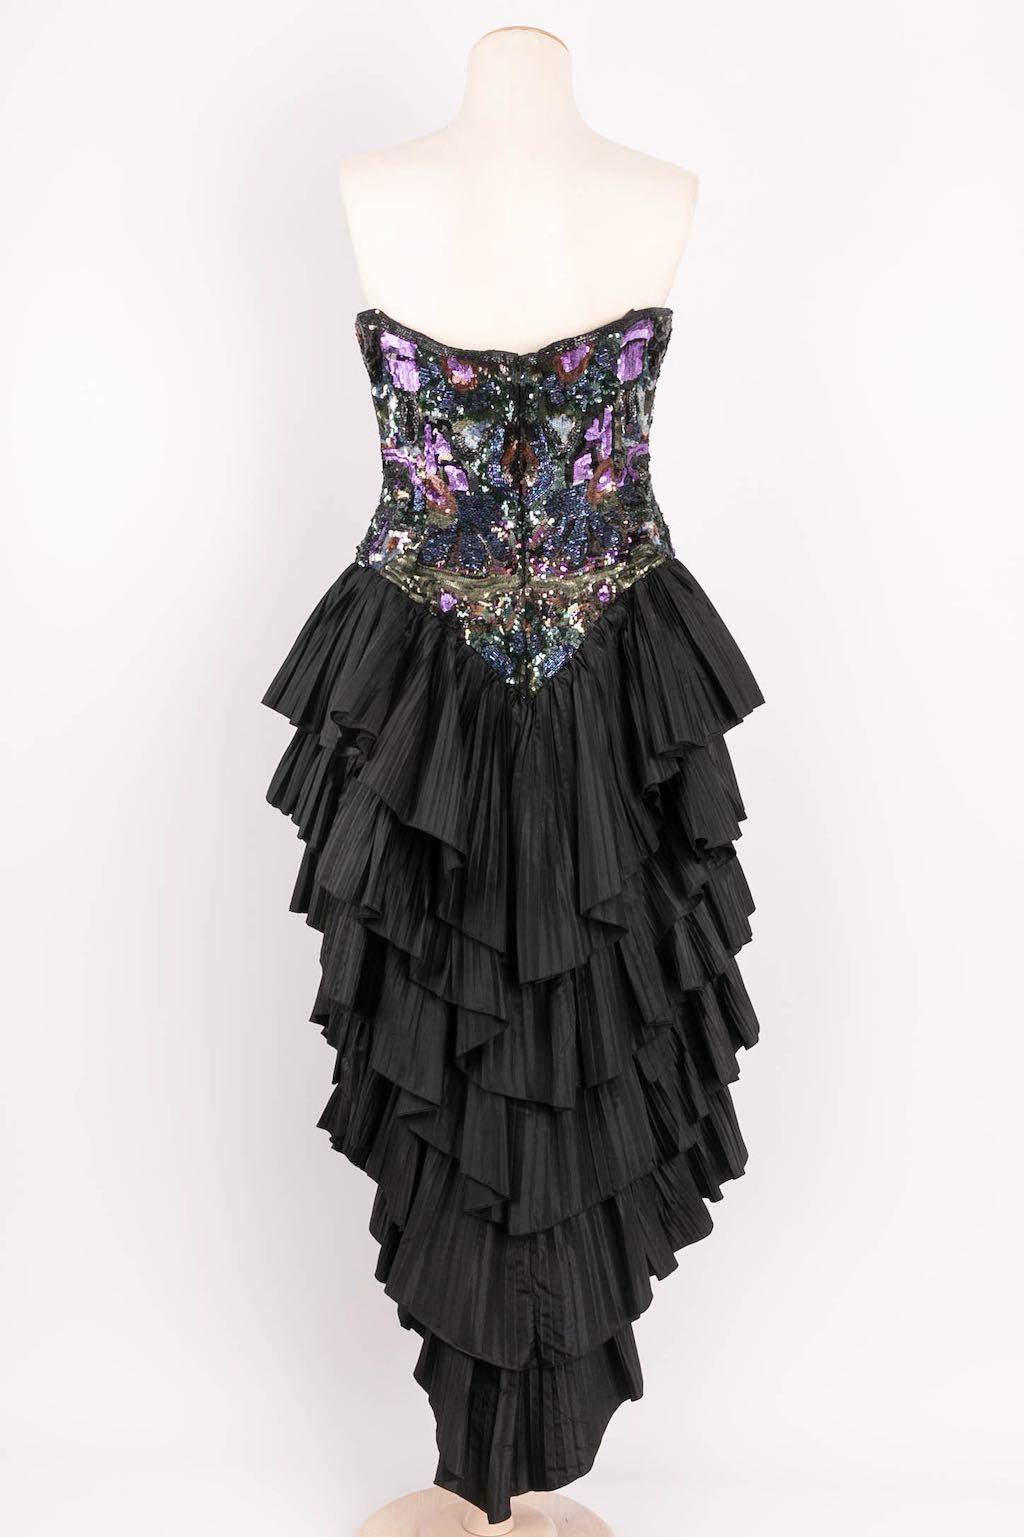 Loris Azzaro Asymmetrical Bustier Dress and its Bolero In Excellent Condition For Sale In SAINT-OUEN-SUR-SEINE, FR